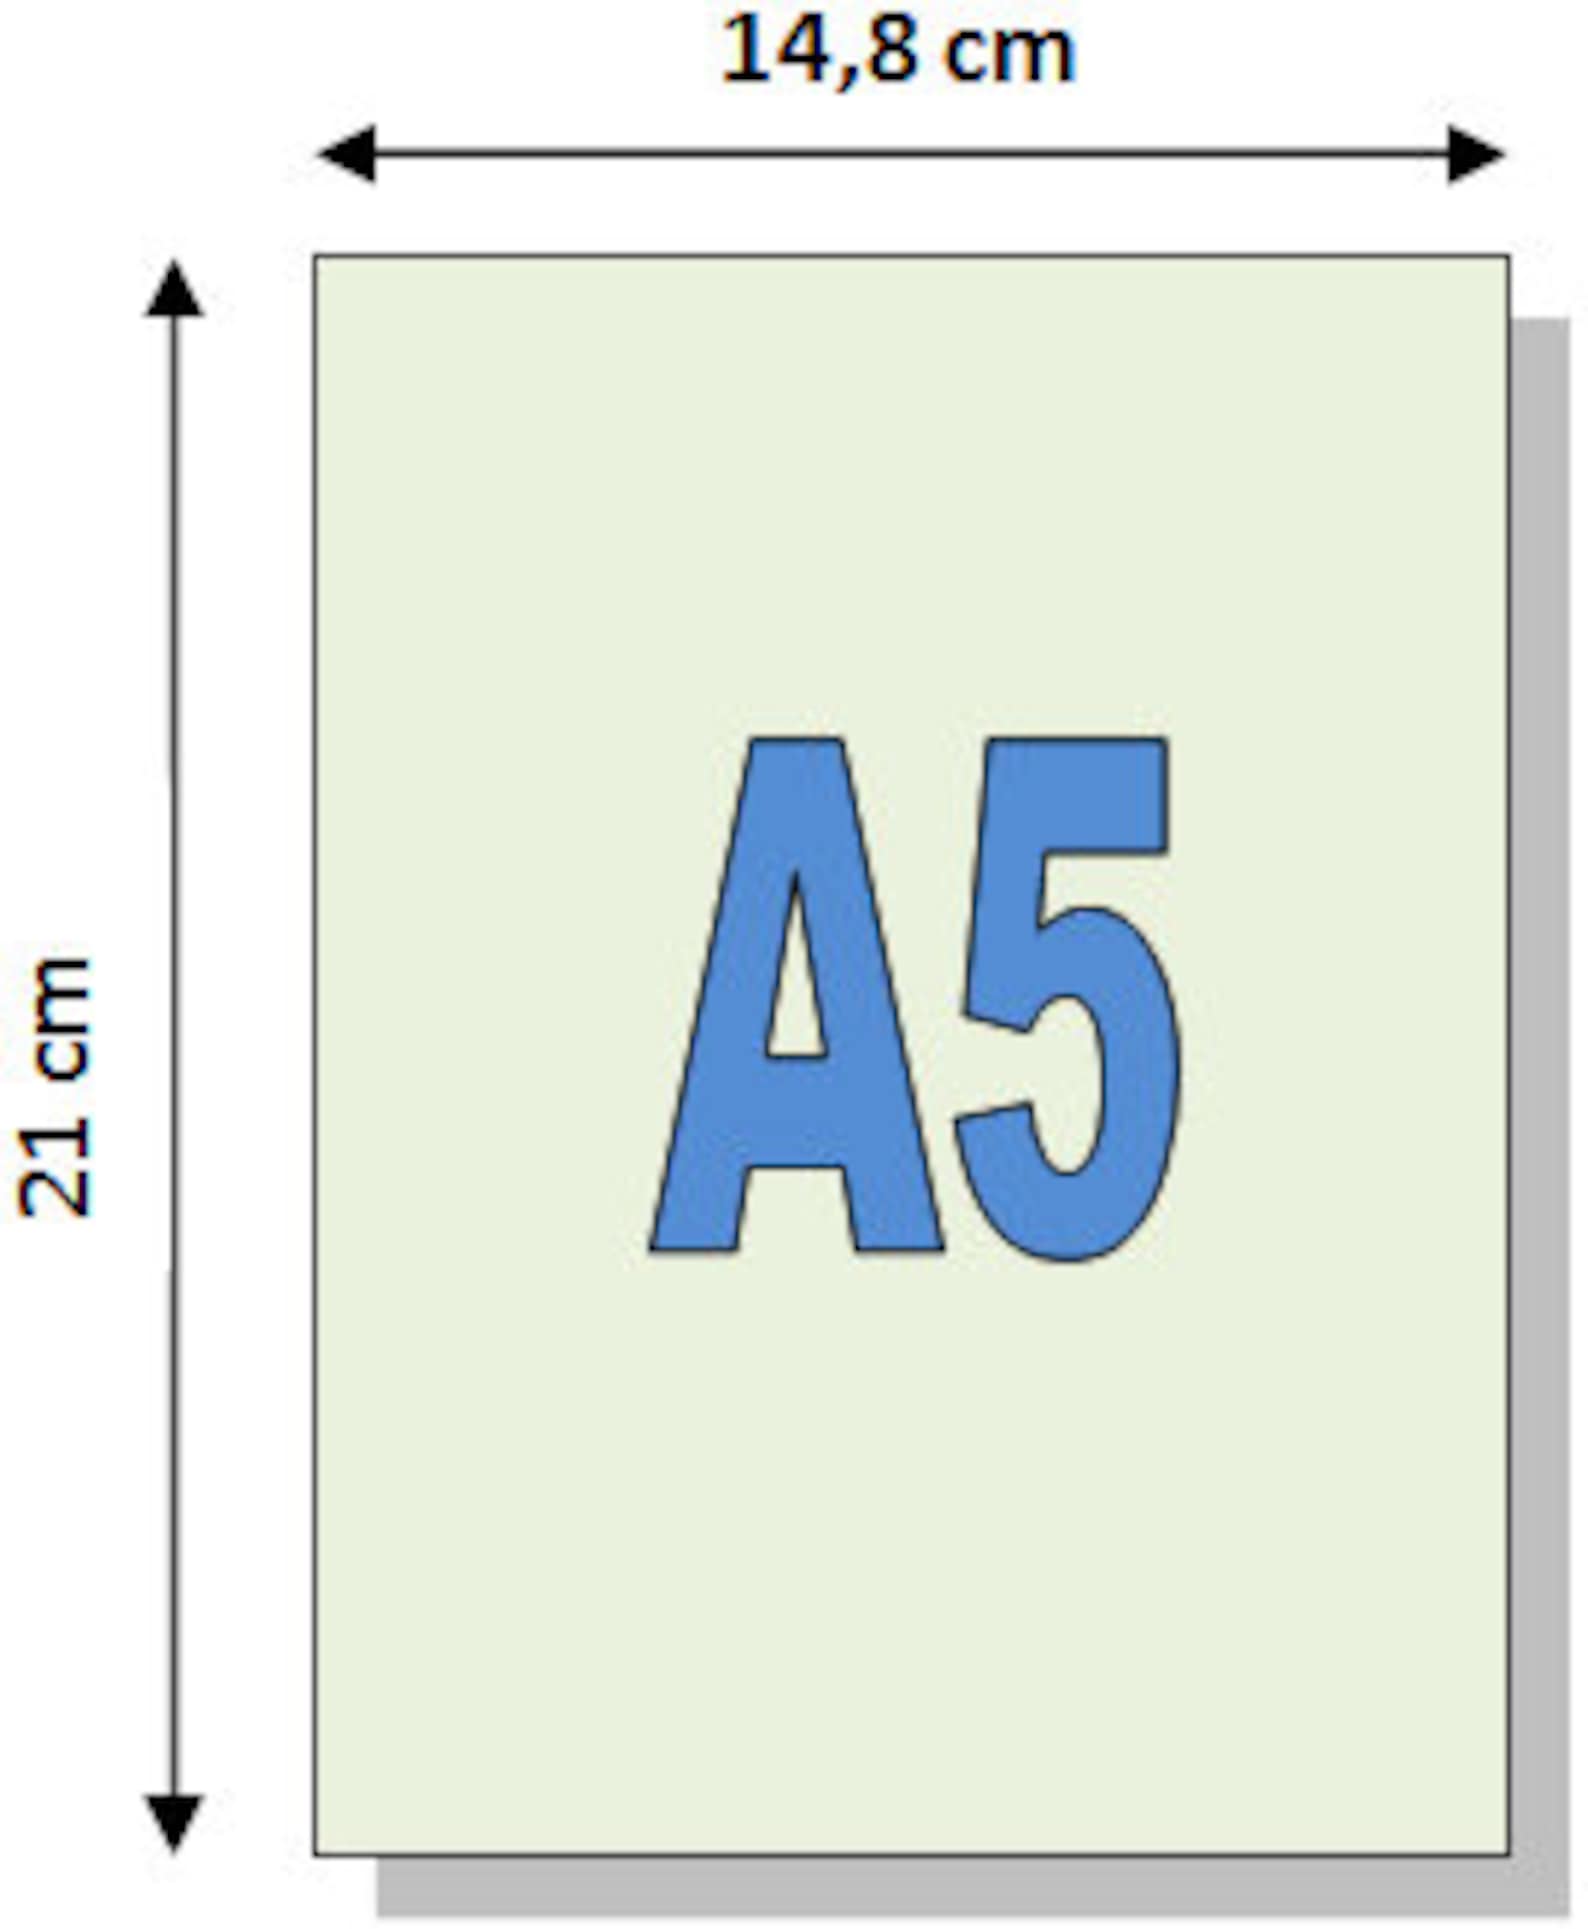 Лист бумаги стандартного формата. А4 а5 а6 Форматы. Формат а5 и а6. Формат а5 Размеры в см. Формат листа а5 Размеры.